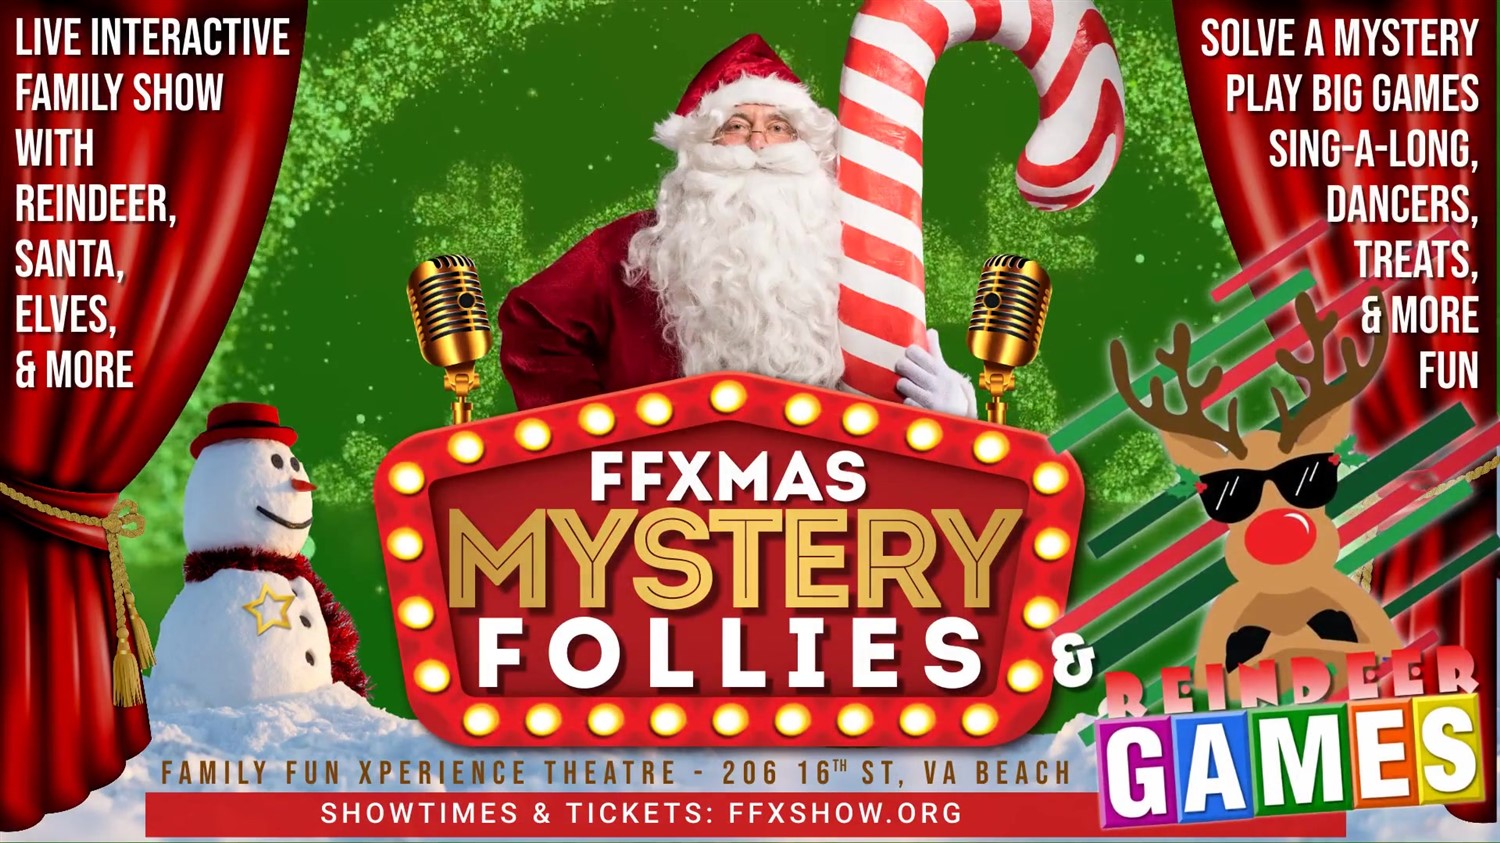 FFXmas MYSTERY FOLLIES Plus Bonus Reindeer Games on dic. 16, 19:00@FFX Theatre - Elegir asientoCompra entradas y obtén información enFamily Fun Xperience tickets.ffxshow.org